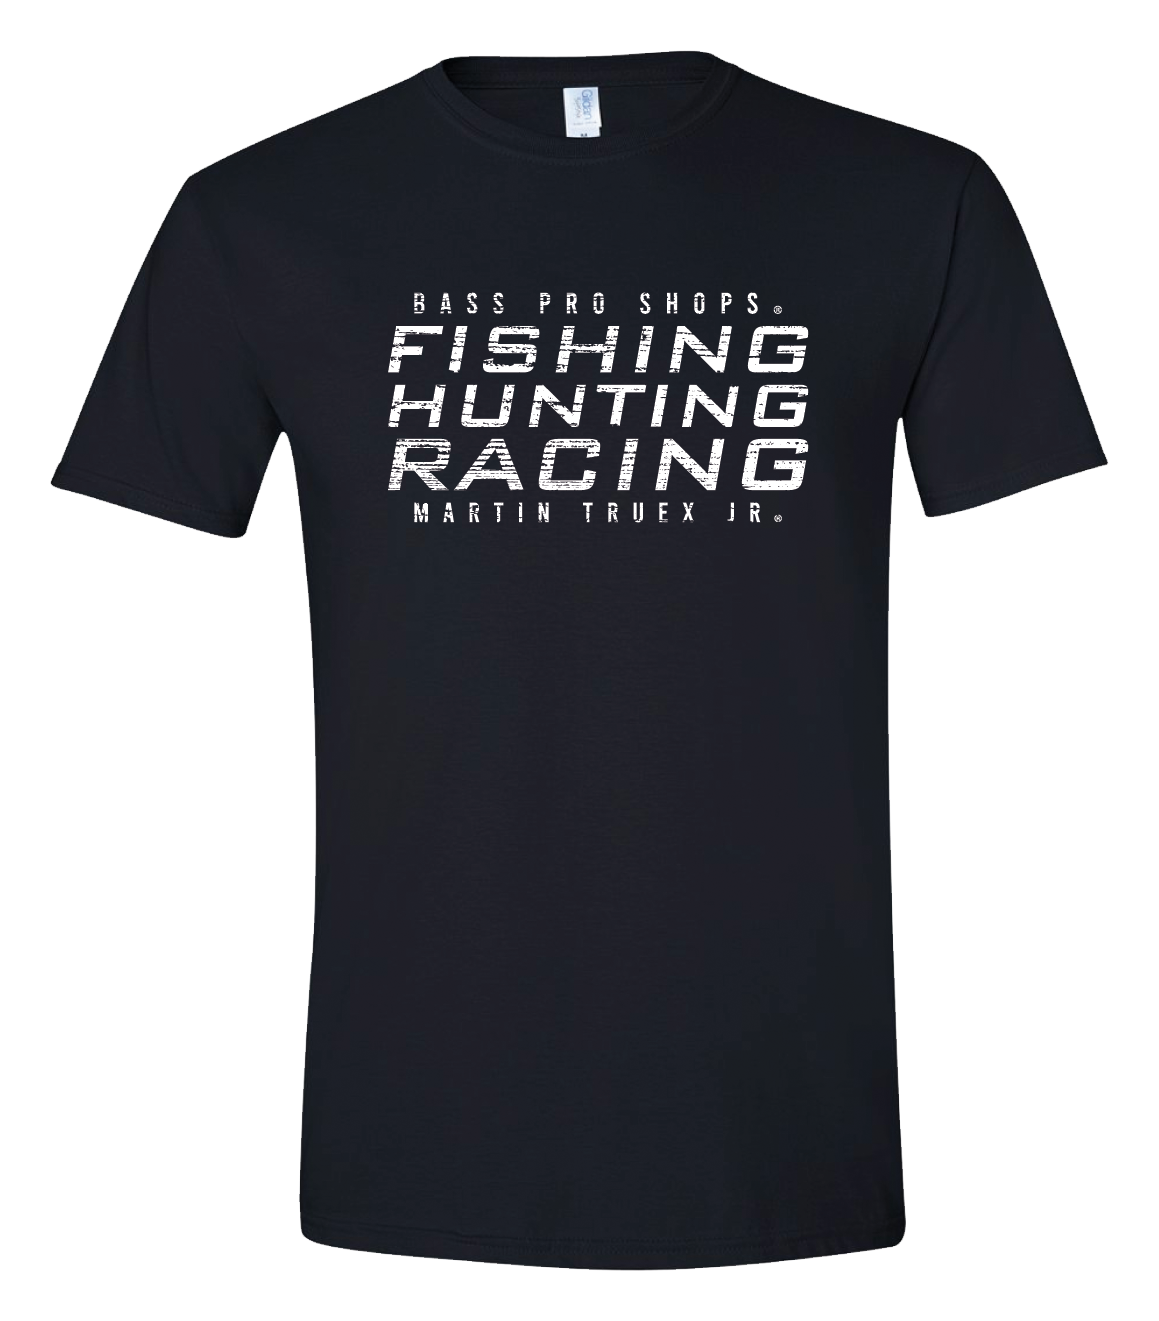 Bass Pro Shops Nascar Martin Truex Jr. Hunting Short-Sleeve T-Shirt for Men - Black - L